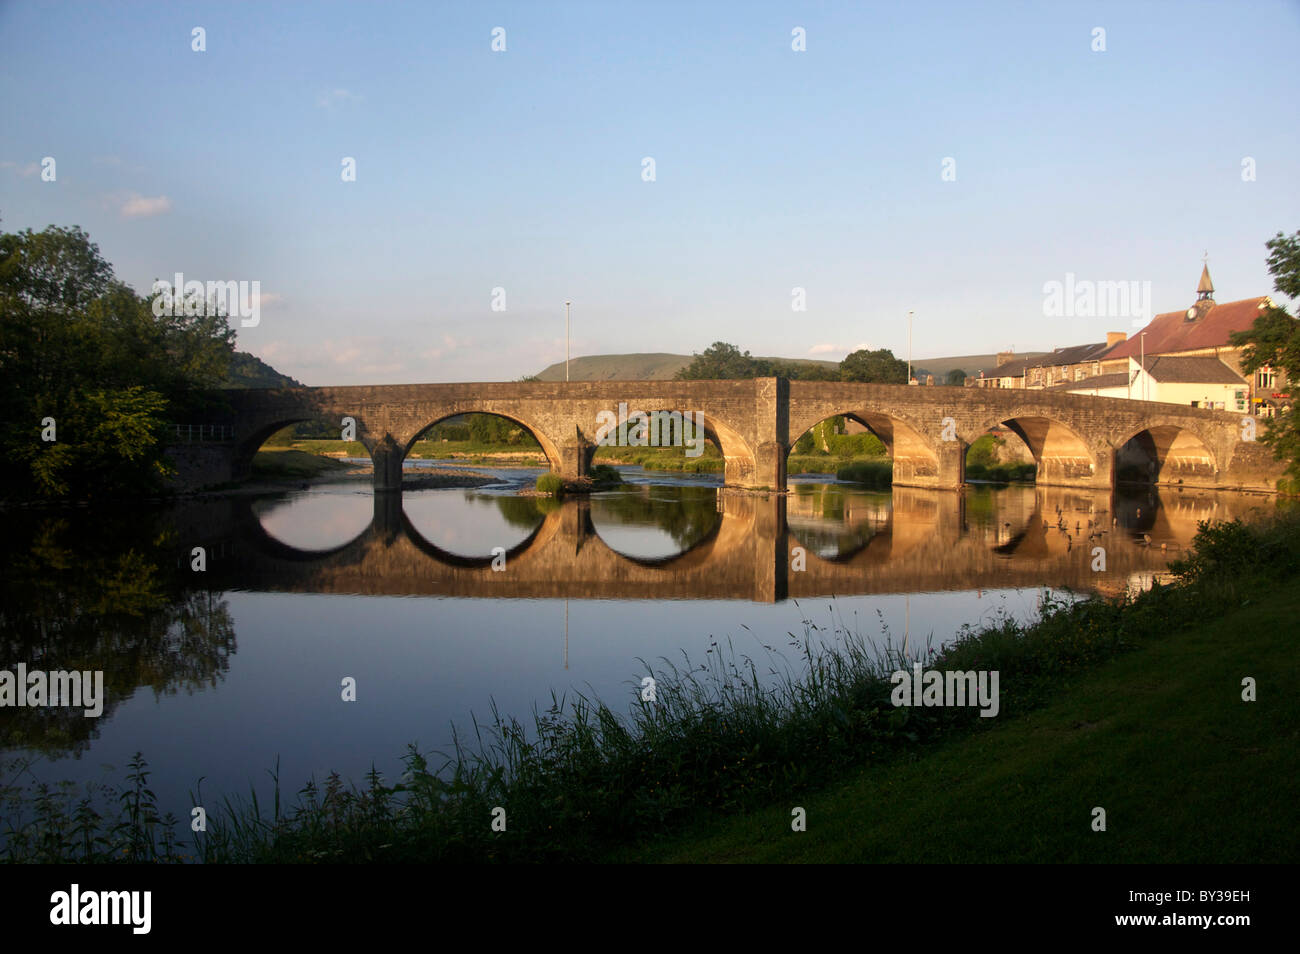 Ad arcate in pietra ponte sul fiume Wye a Builth Wells (Llanfair-ym-Muallt) Powys Mid Wales UK Foto Stock